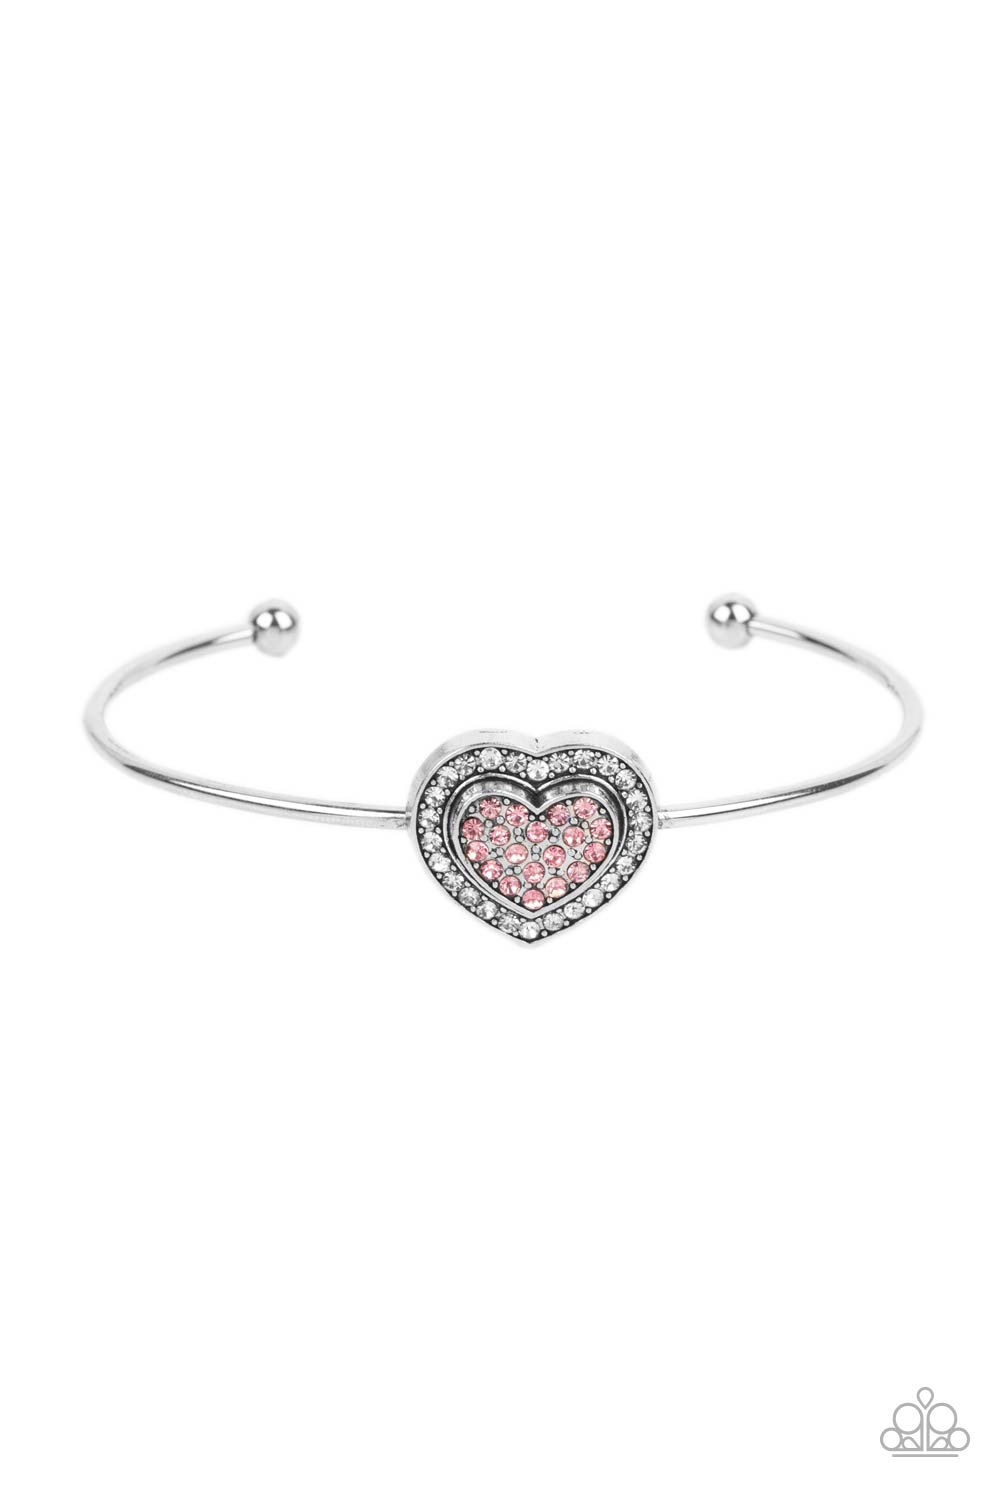 Stunning Soulmates Pink Rhinestone Heart Cuff Bracelet - Paparazzi Accessories- lightbox - CarasShop.com - $5 Jewelry by Cara Jewels